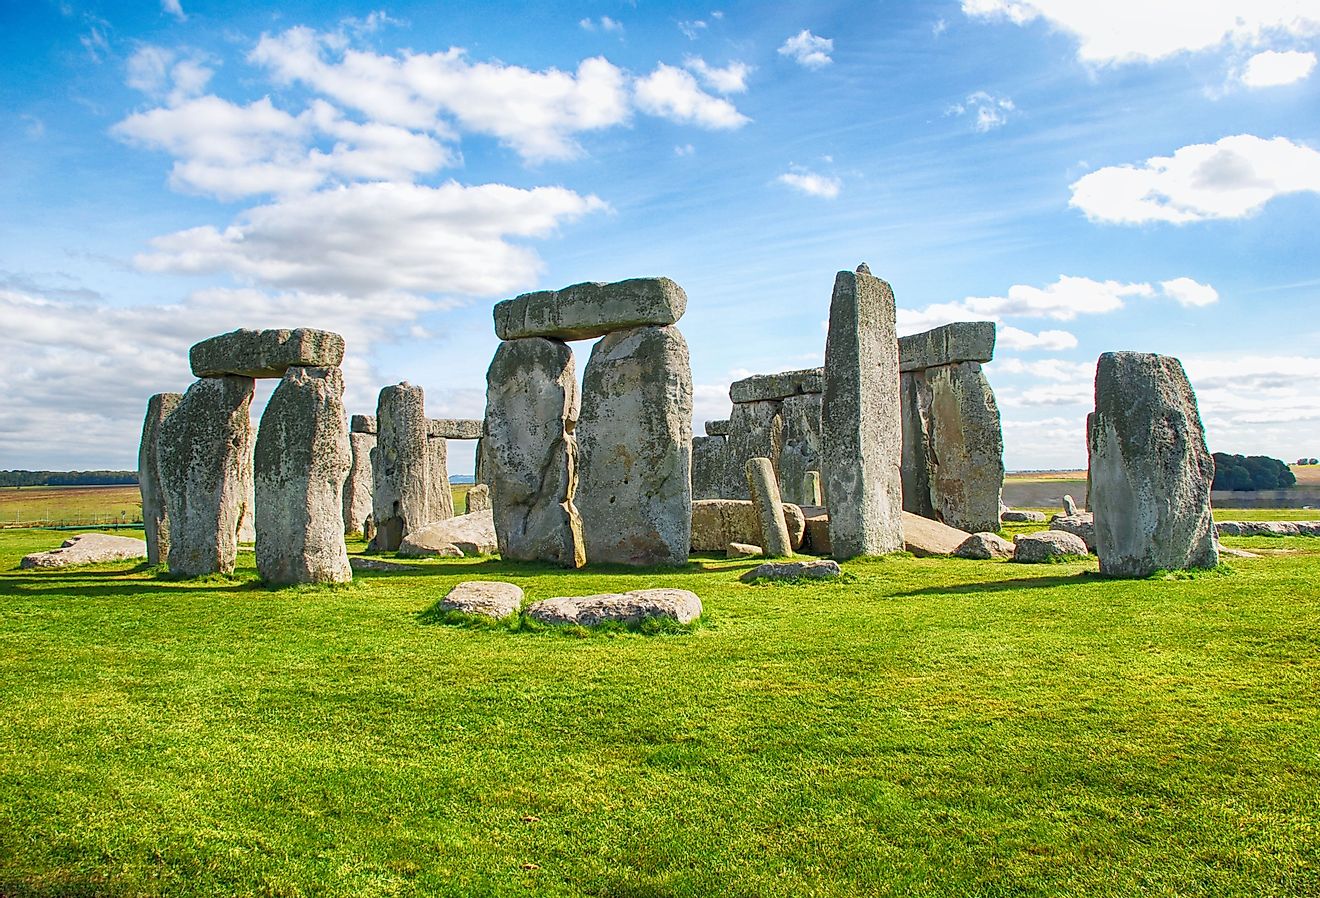 Stonehenge, England. Image credit Mr Nai via Shutterstock